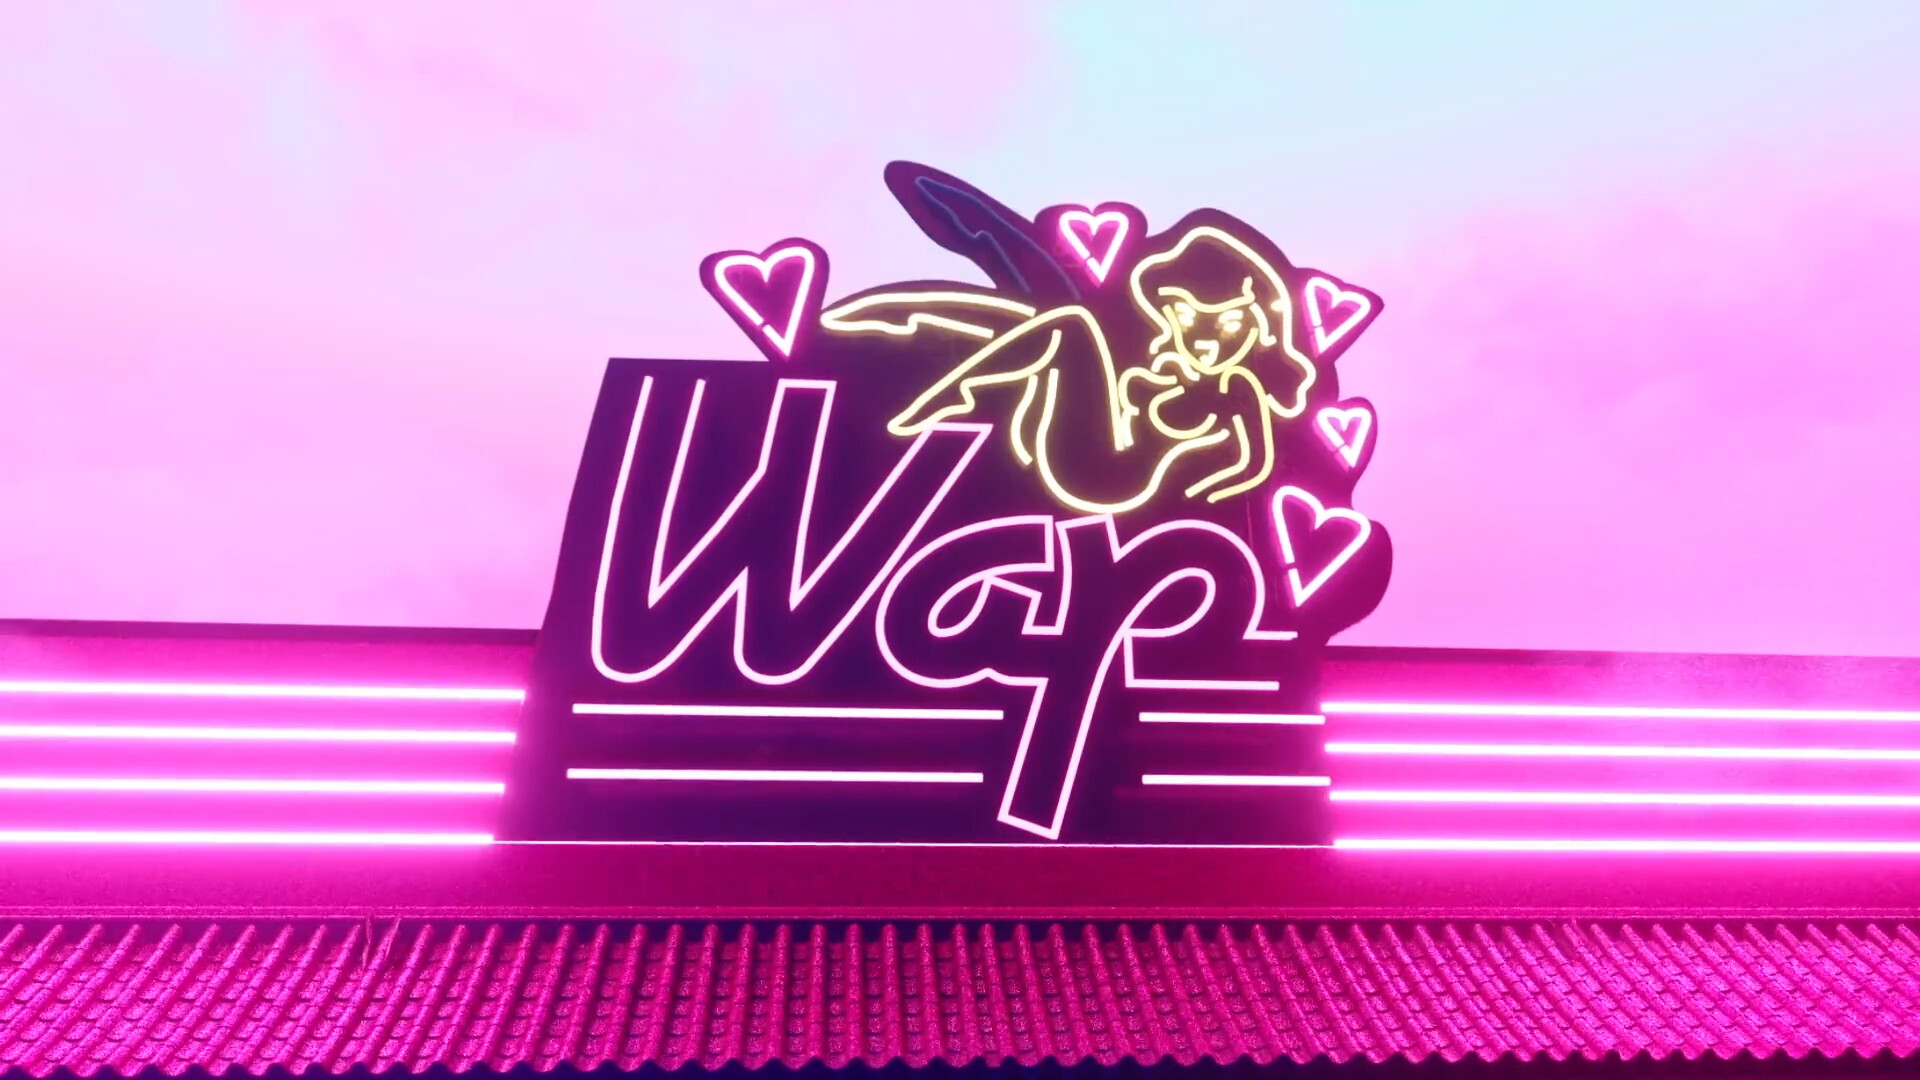 Wap feat. Вап. What does wap mean.